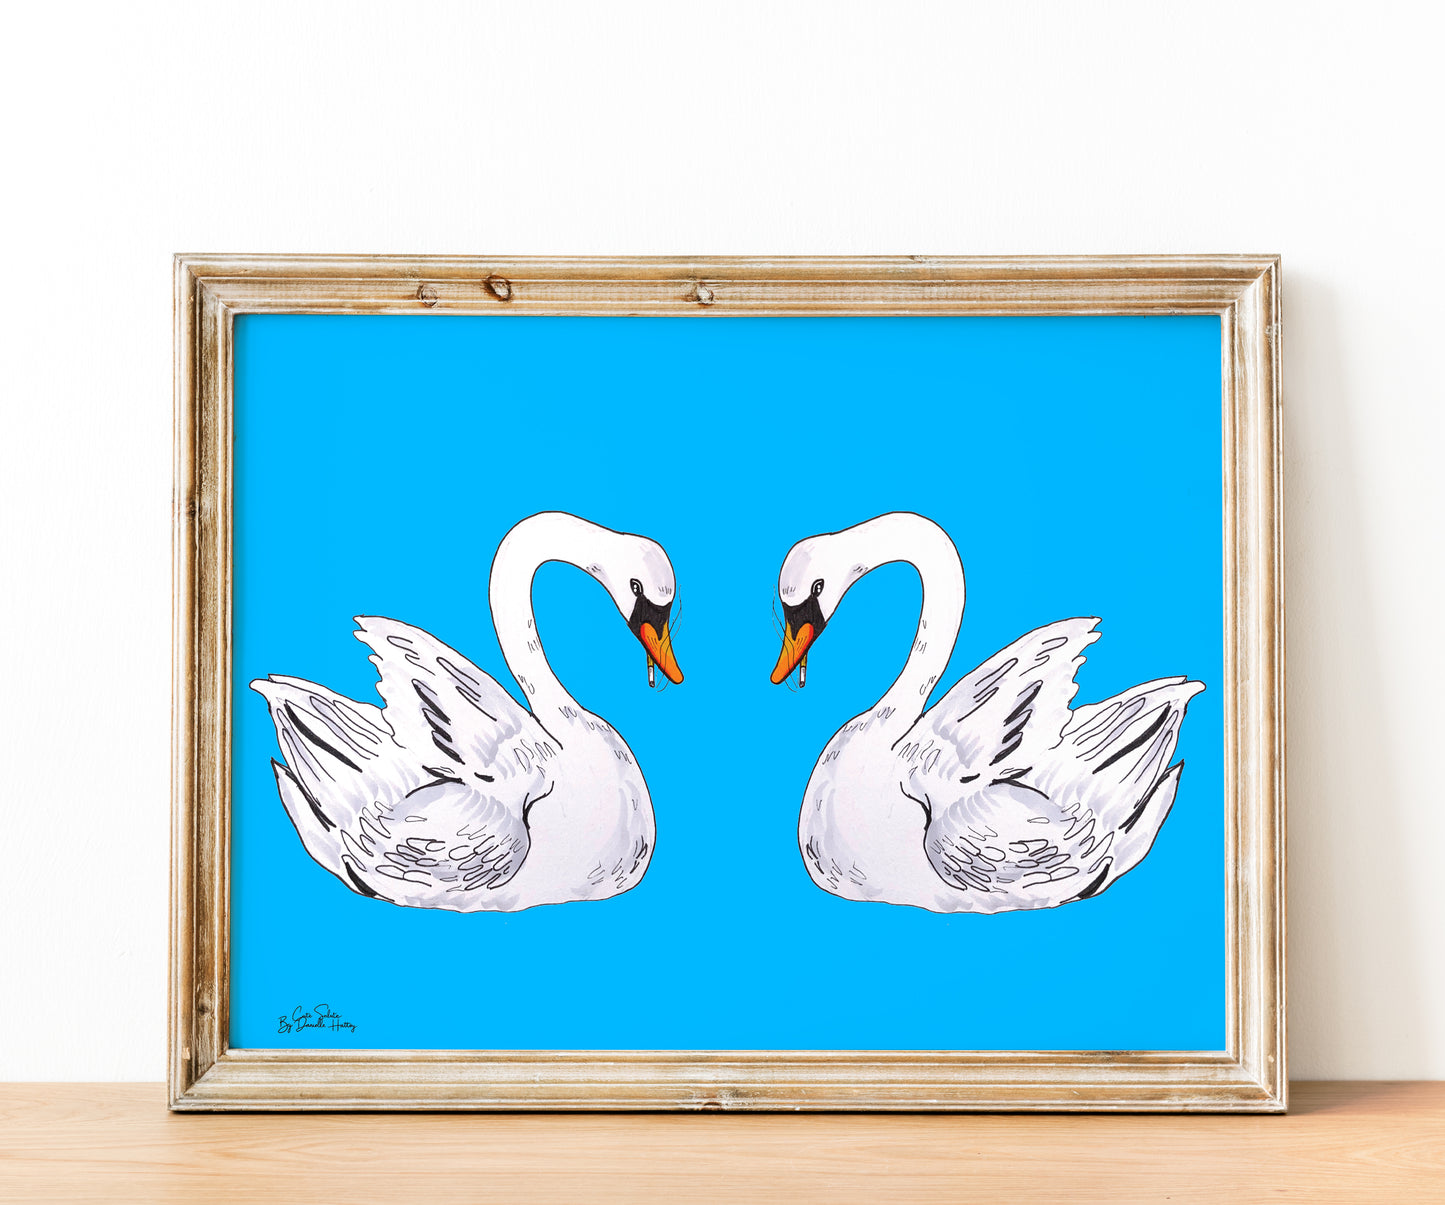 wall art of two swans smoking a ciggarette 